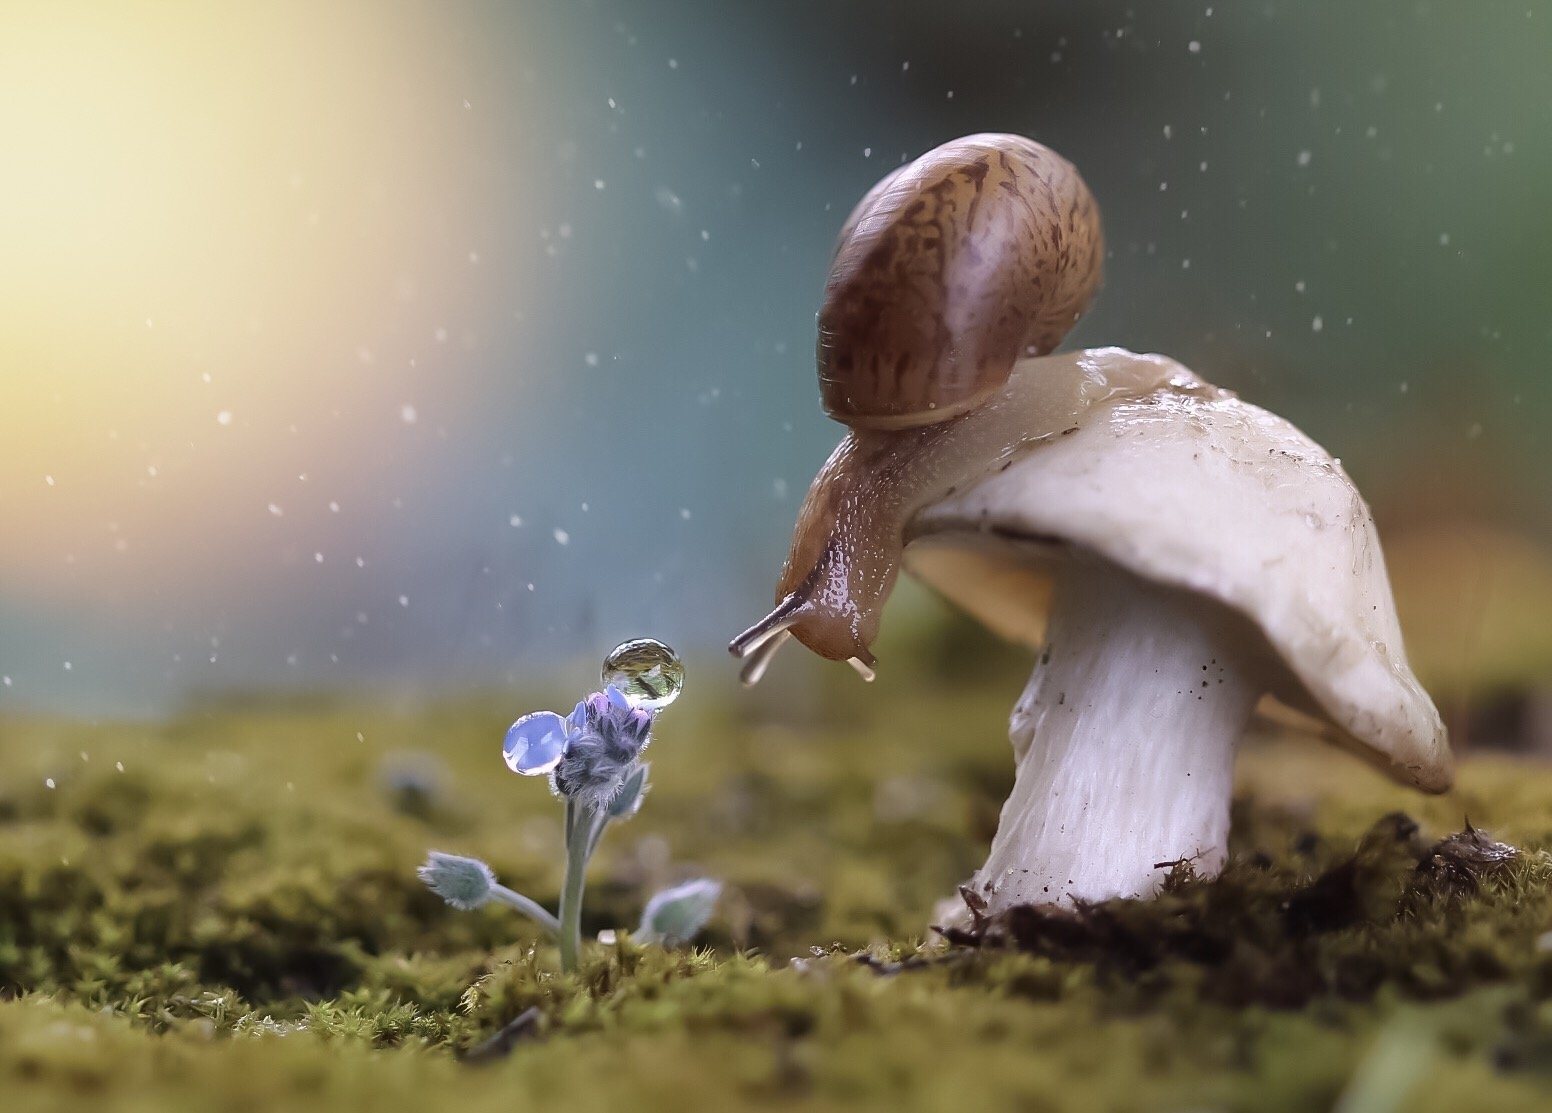 макро, macro, snail, mushroom, гриб, nature, wildlife, evening, Людмила Гудина